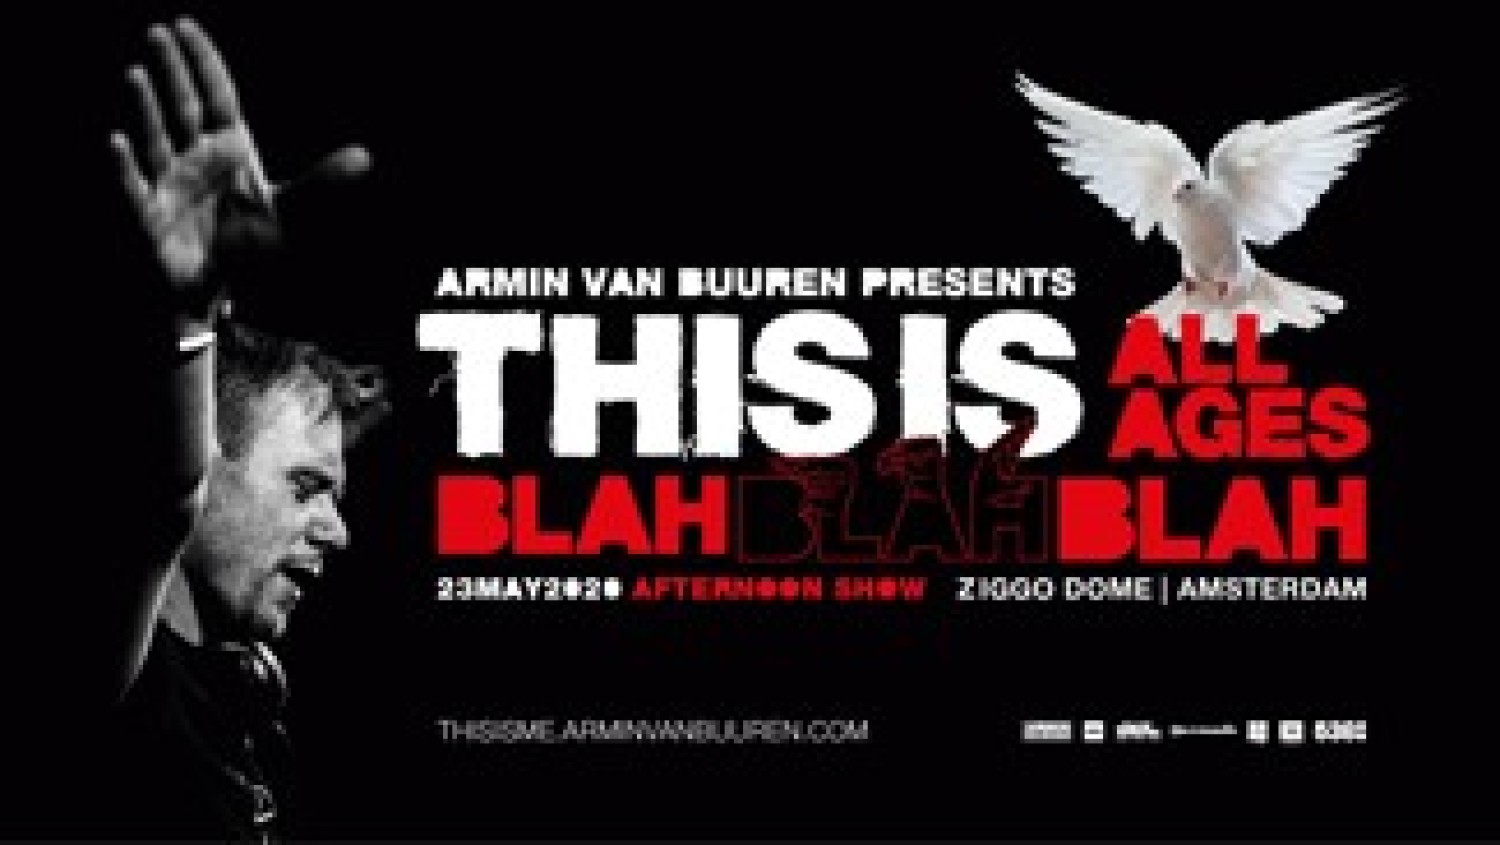 Party nieuws: Armin van Buuren This is Blah Blah Blah op 23 mei!